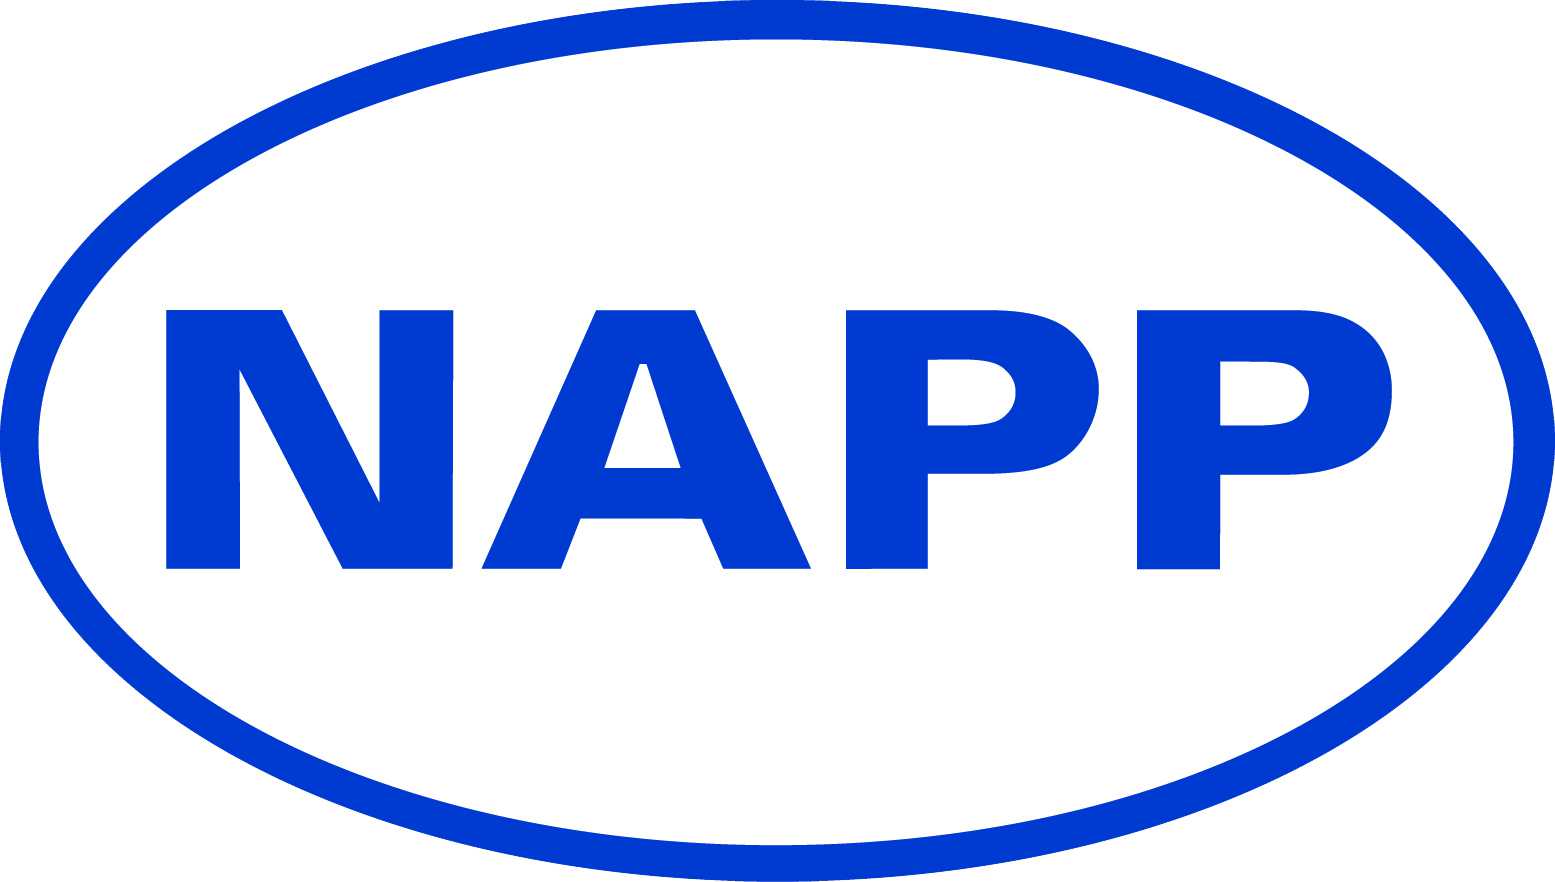 A C in Blue Oval Logo - Blue Napp logo no background